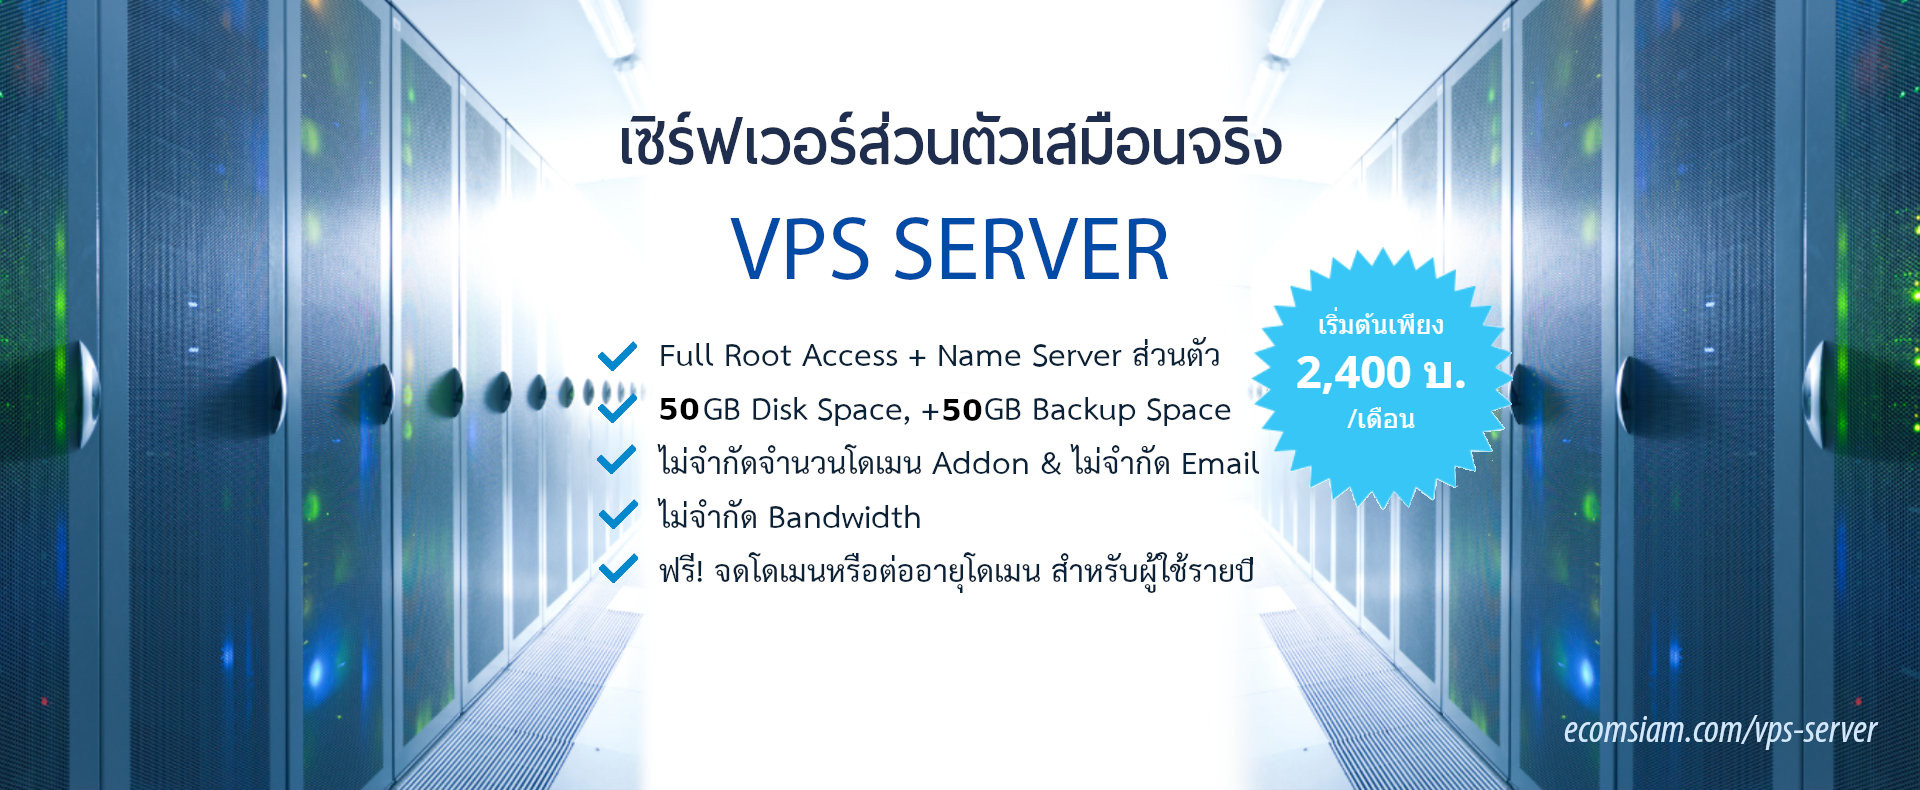 VPS Server - เซิฟท์เวอร์ส่วนตัวเสมือนจริง web hosting thailand